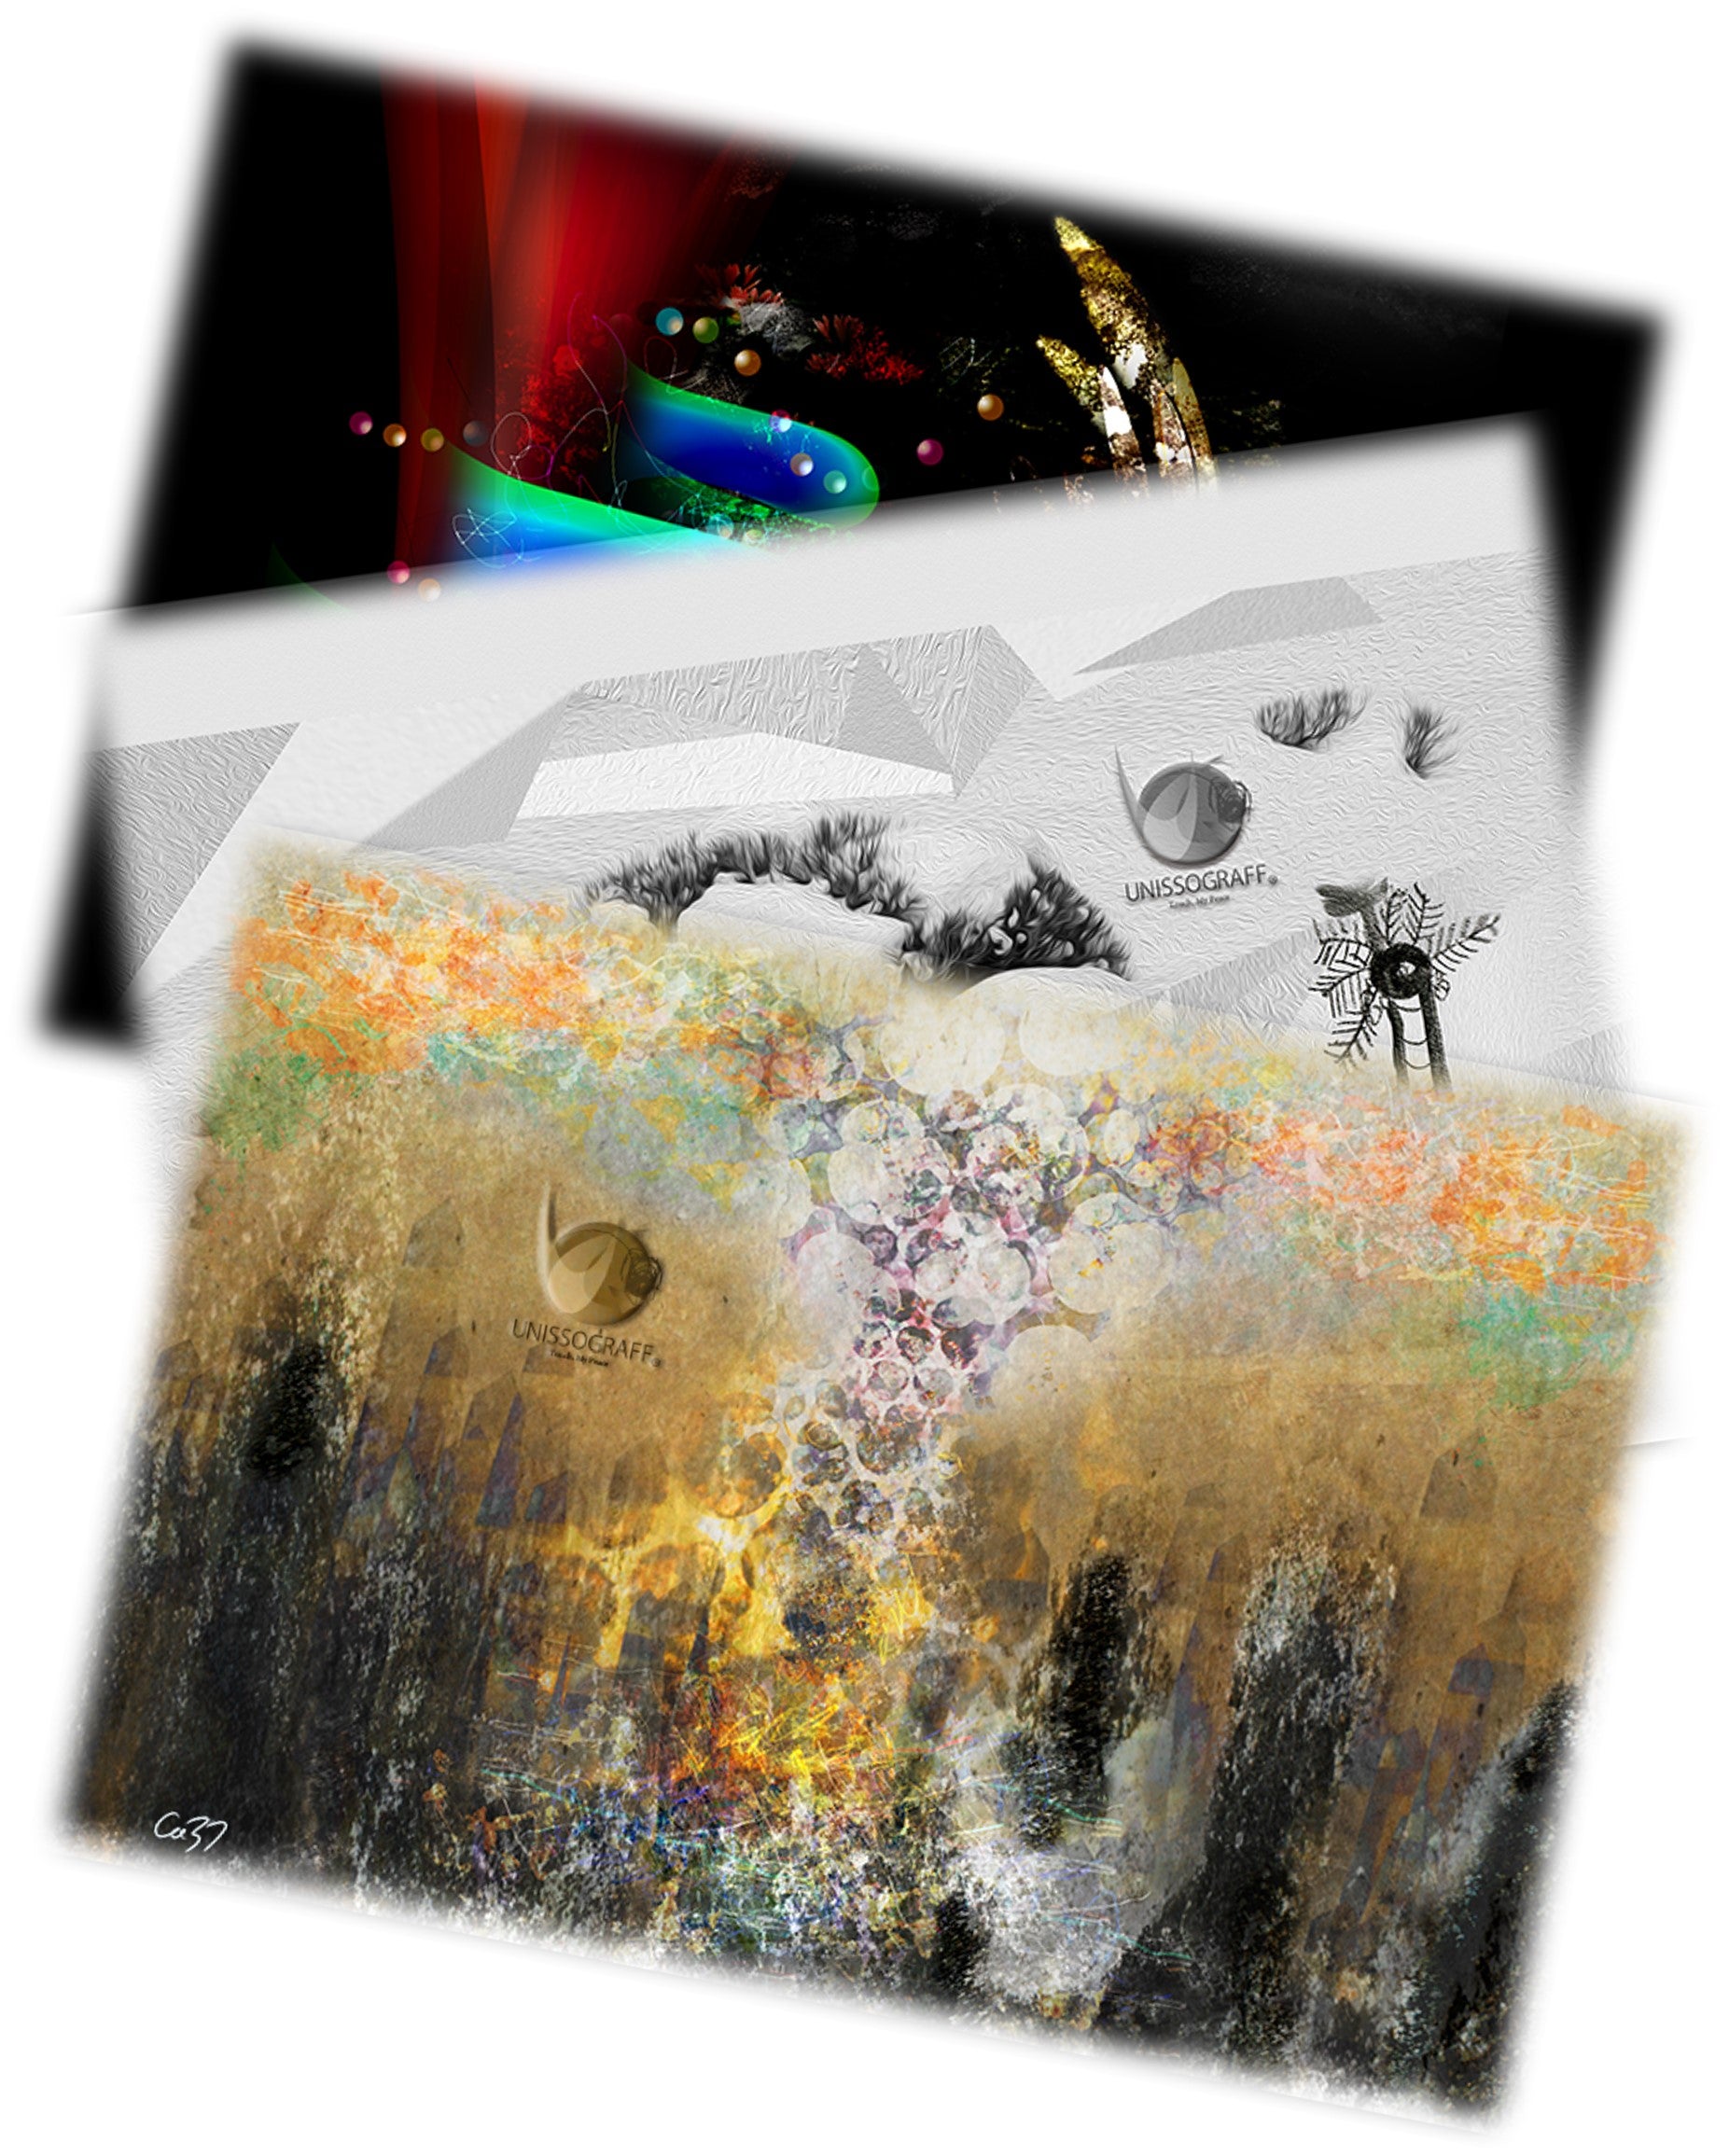 Unissograff artwork image collage